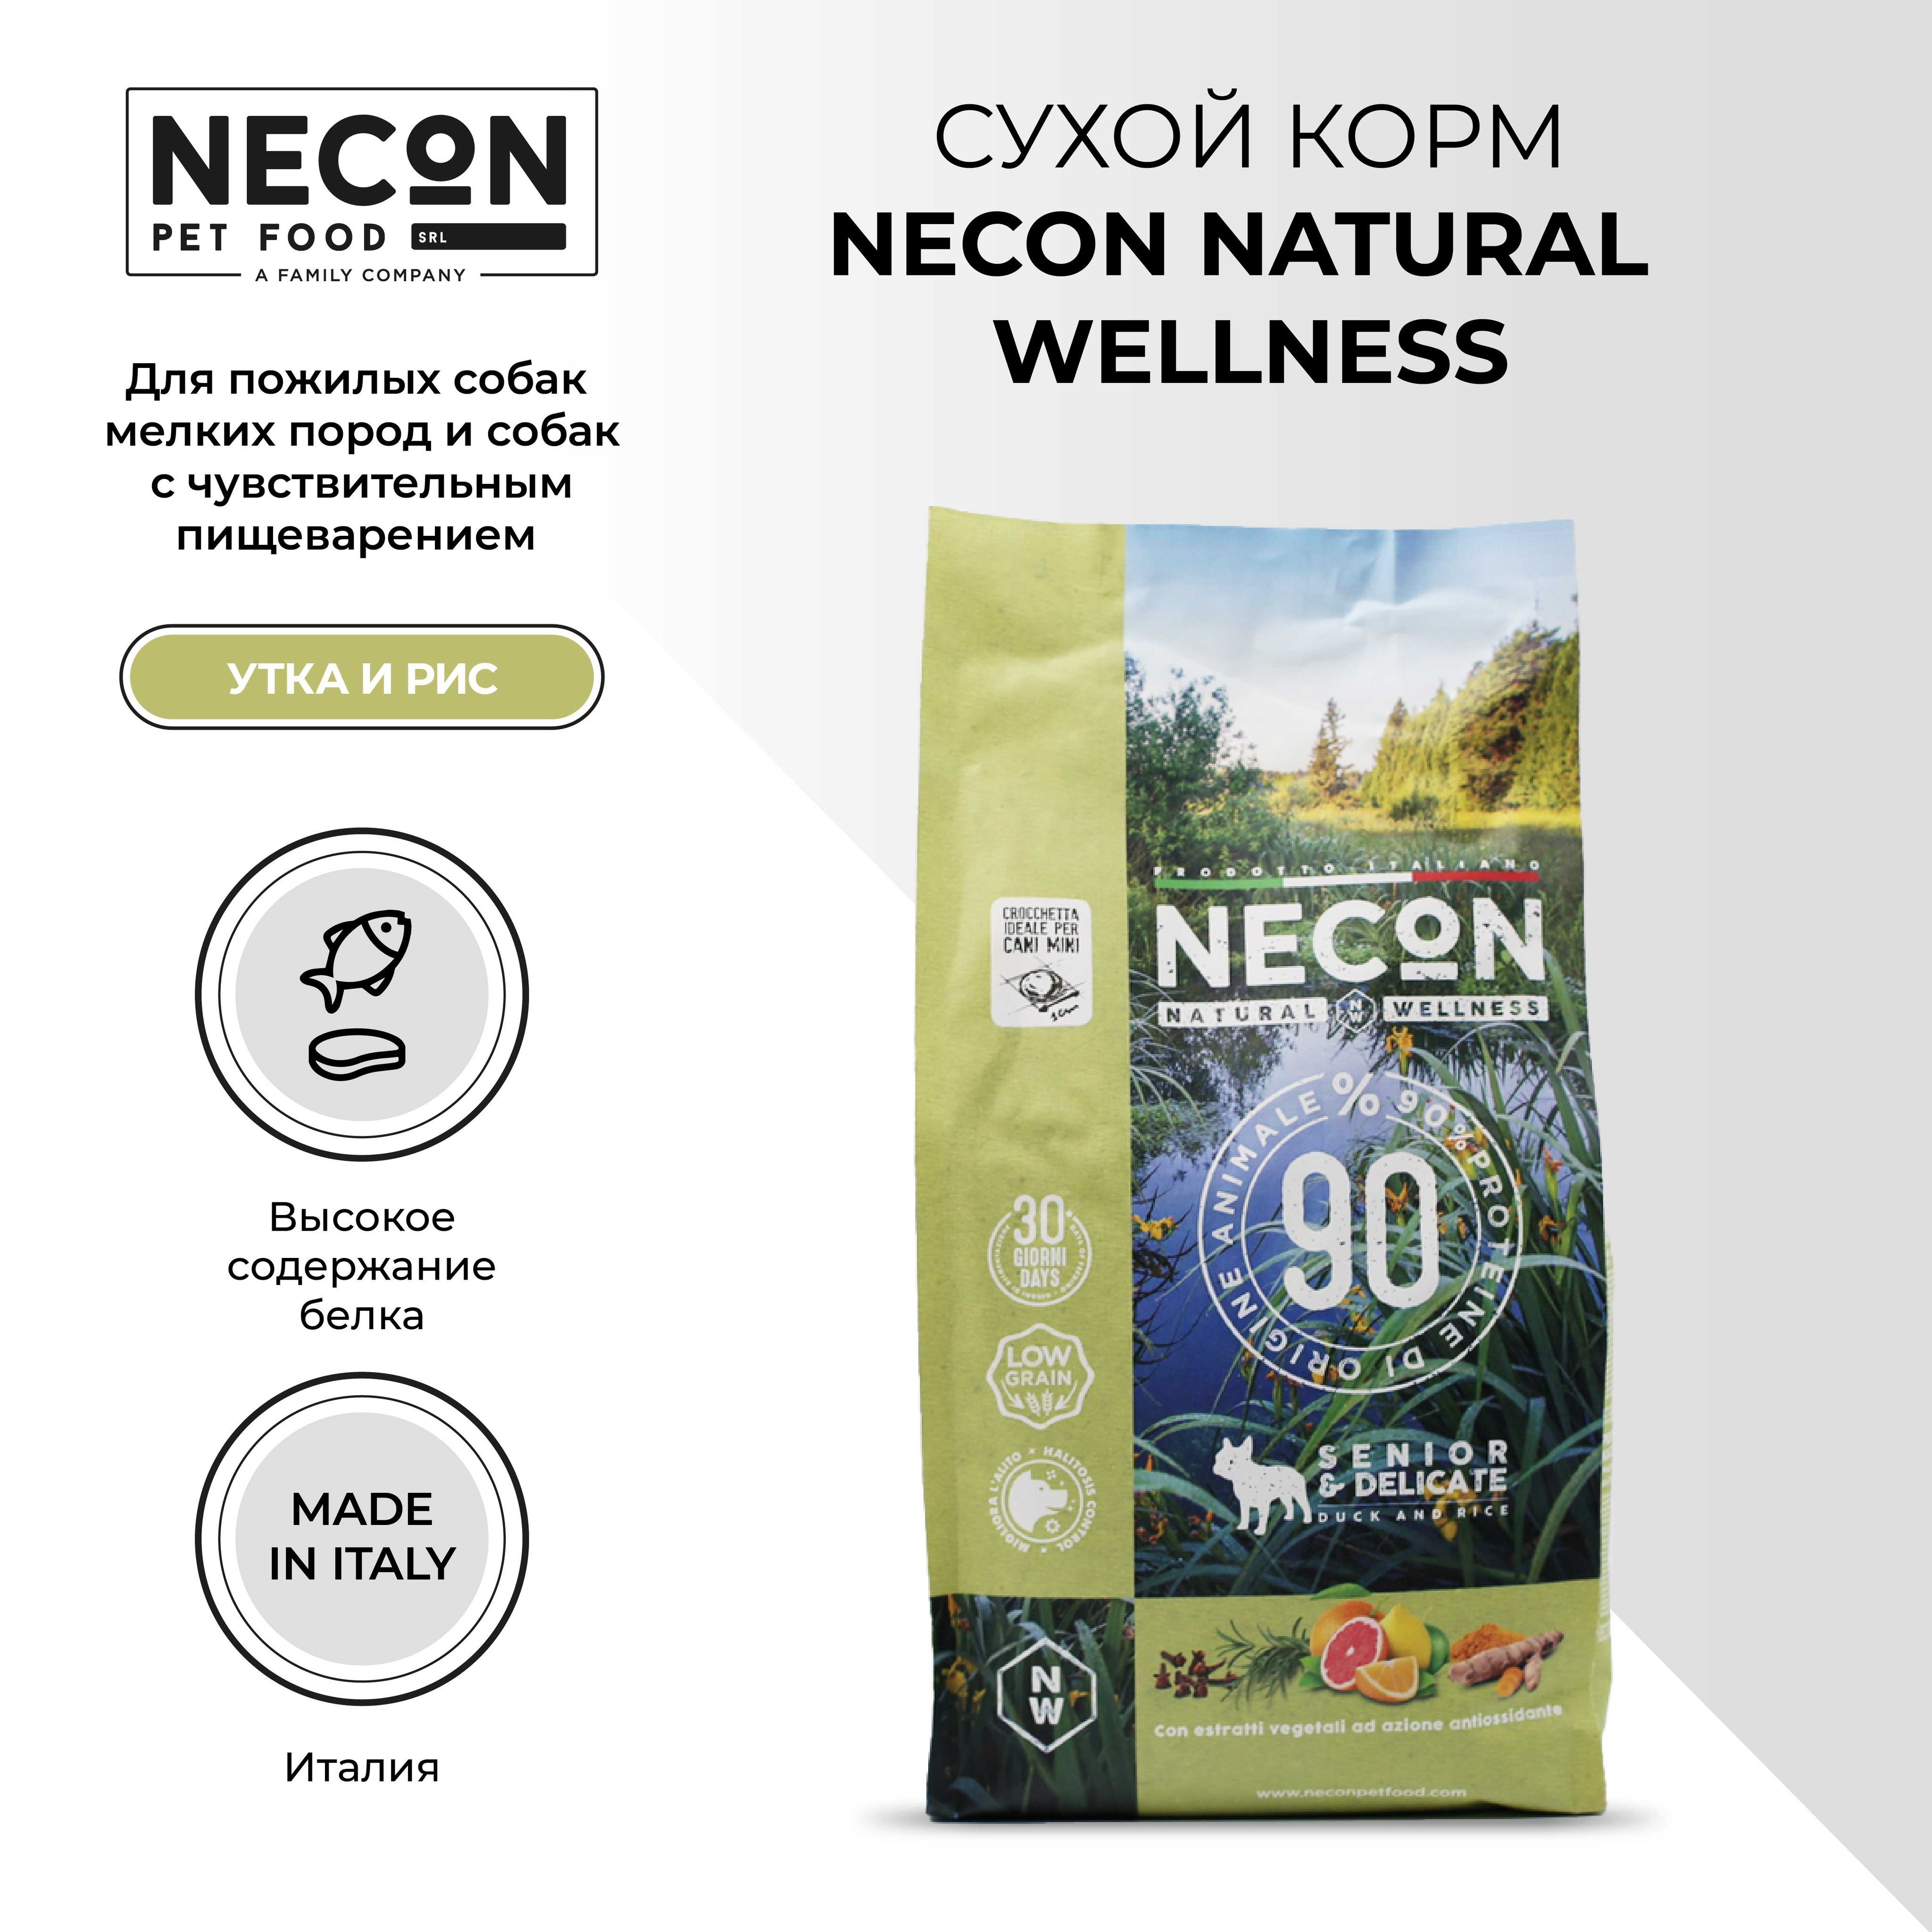 Сухой корм для собак Necon Natural Wellness, утка и рис, 2 кг